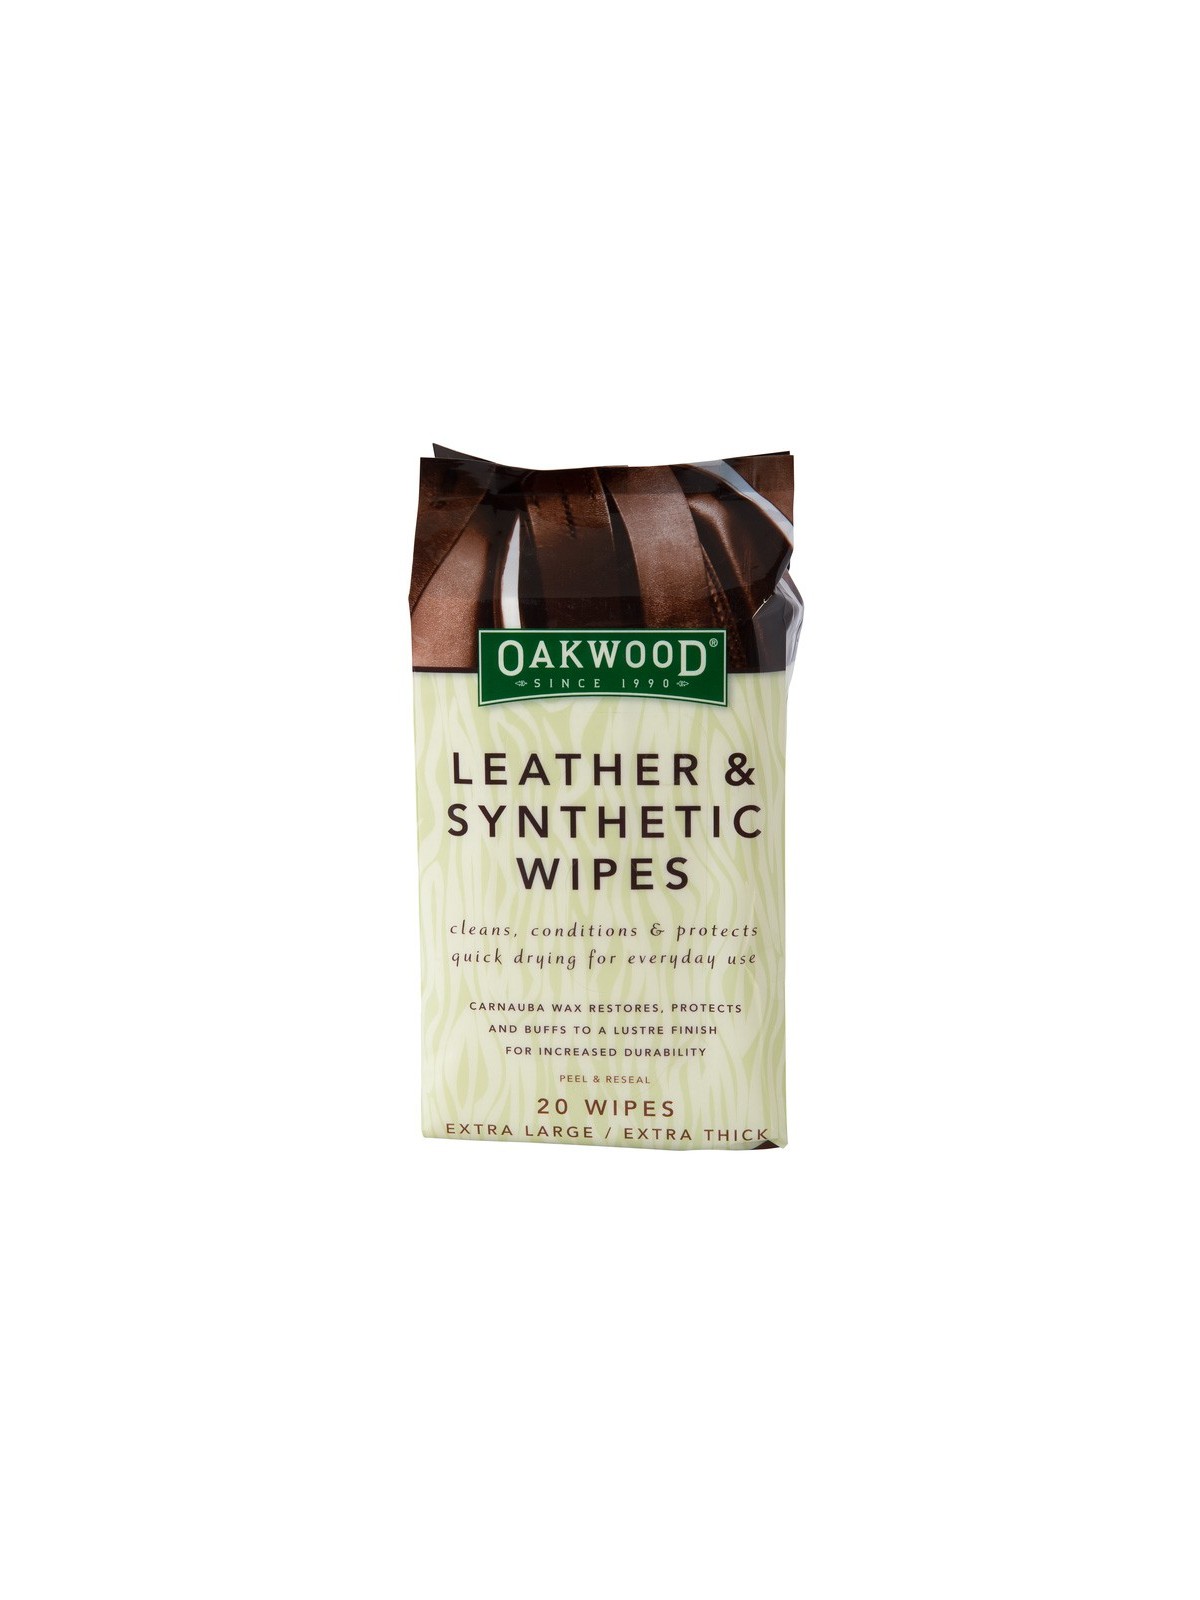 Oakwood Leather Wipes